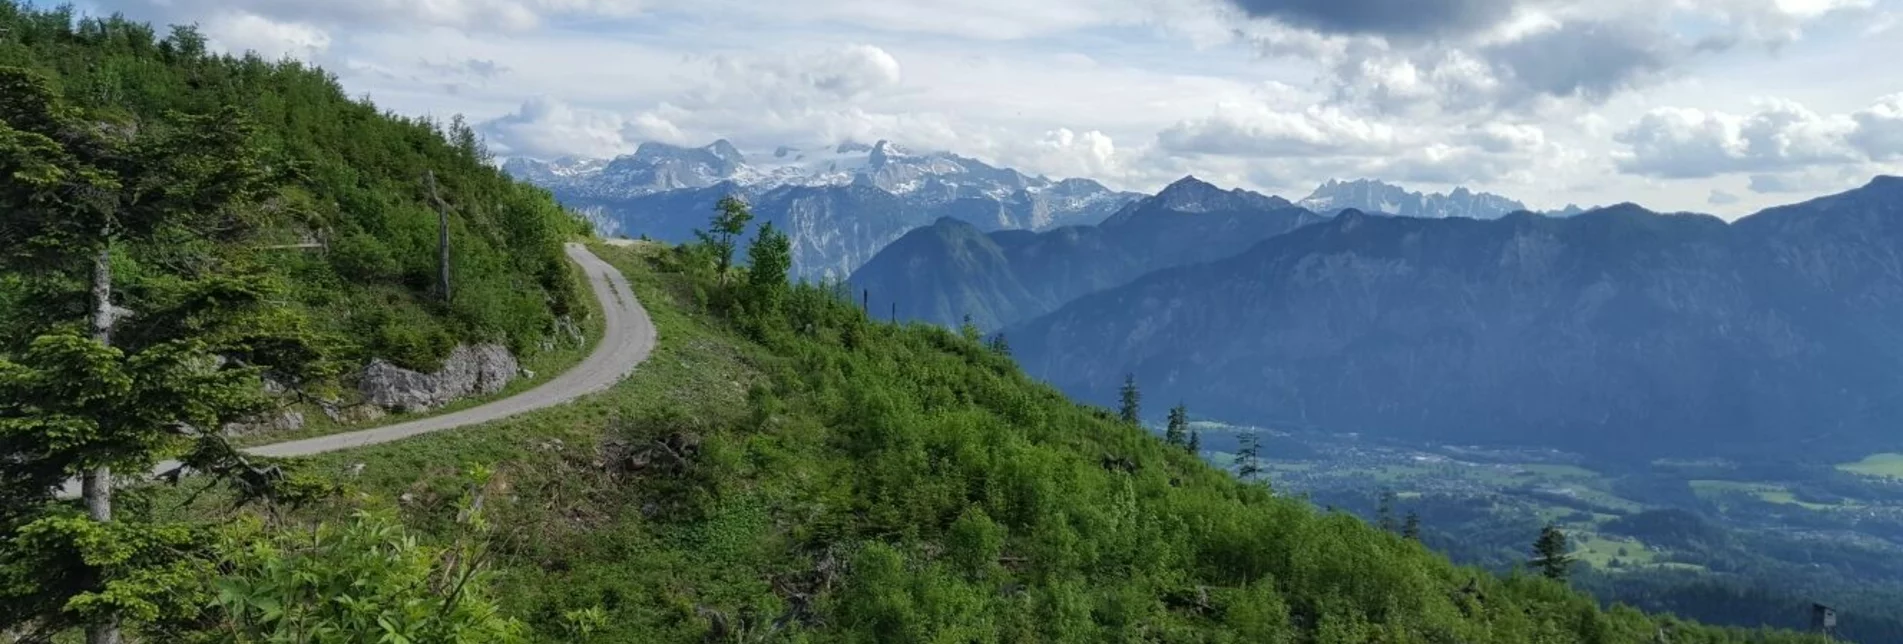 Mountain Biking Raschberg round - Touren-Impression #1 | © Community